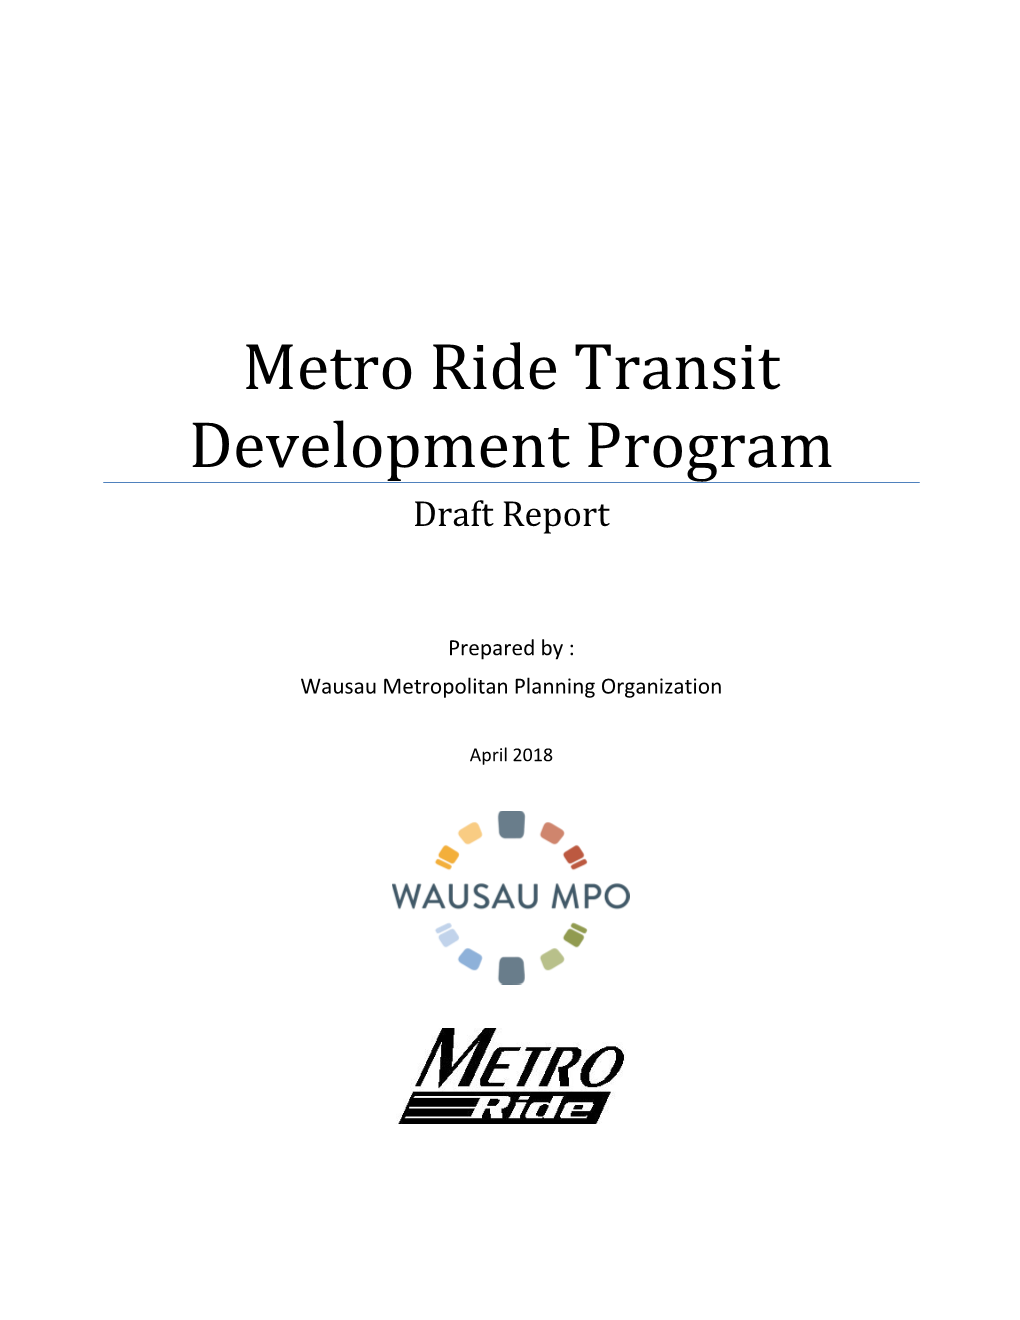 Metro Ride Transit Development Program Draft Report